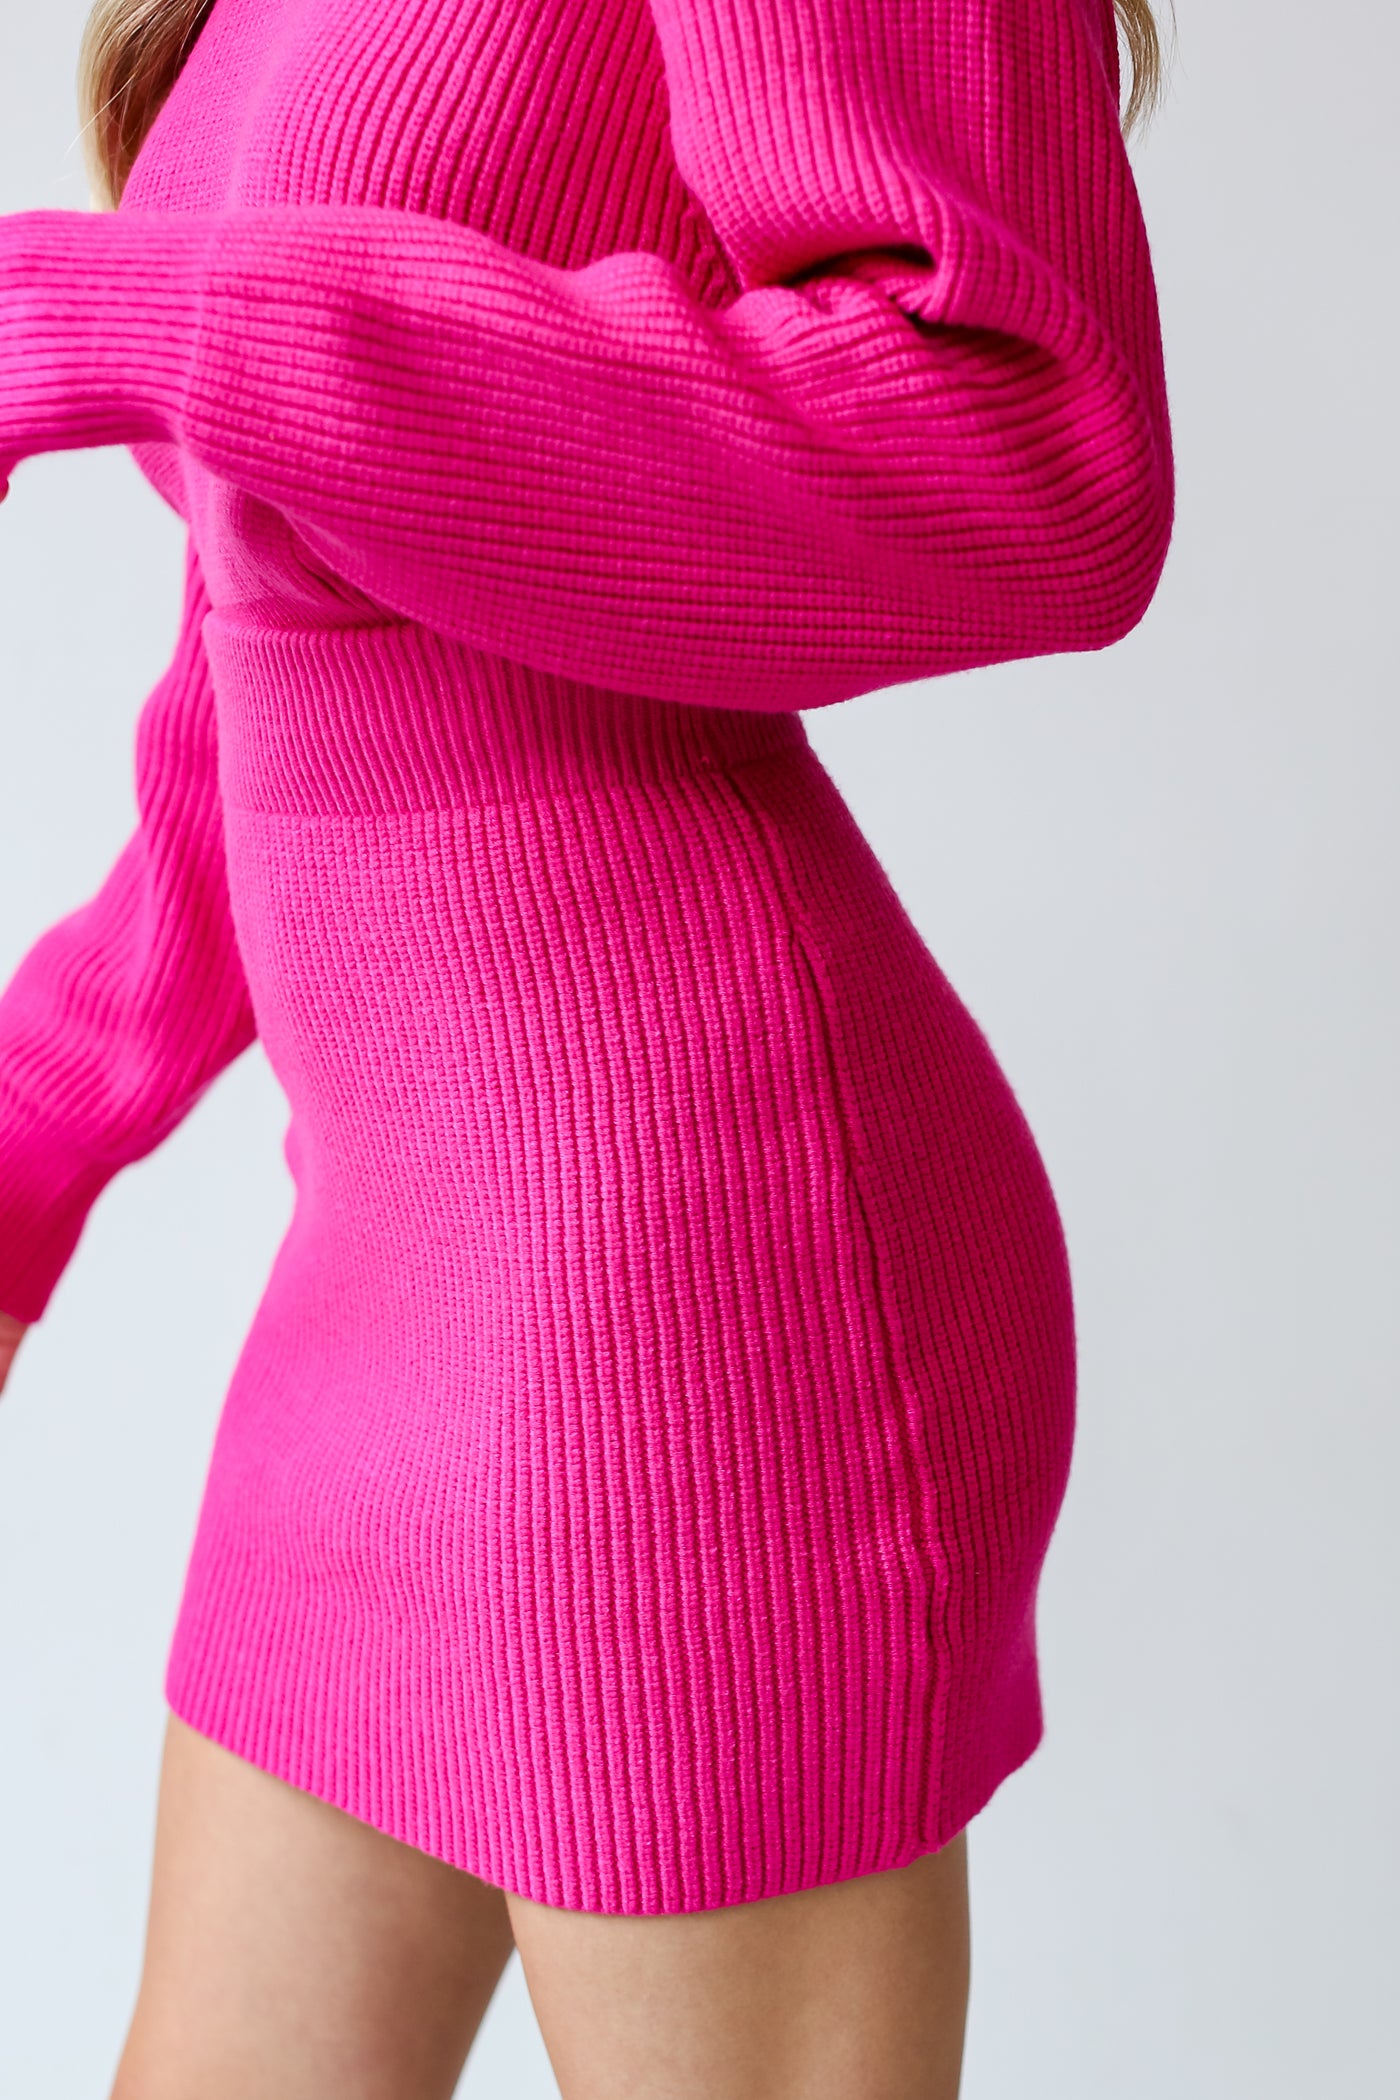 hot pink Sweater Mini Skirt